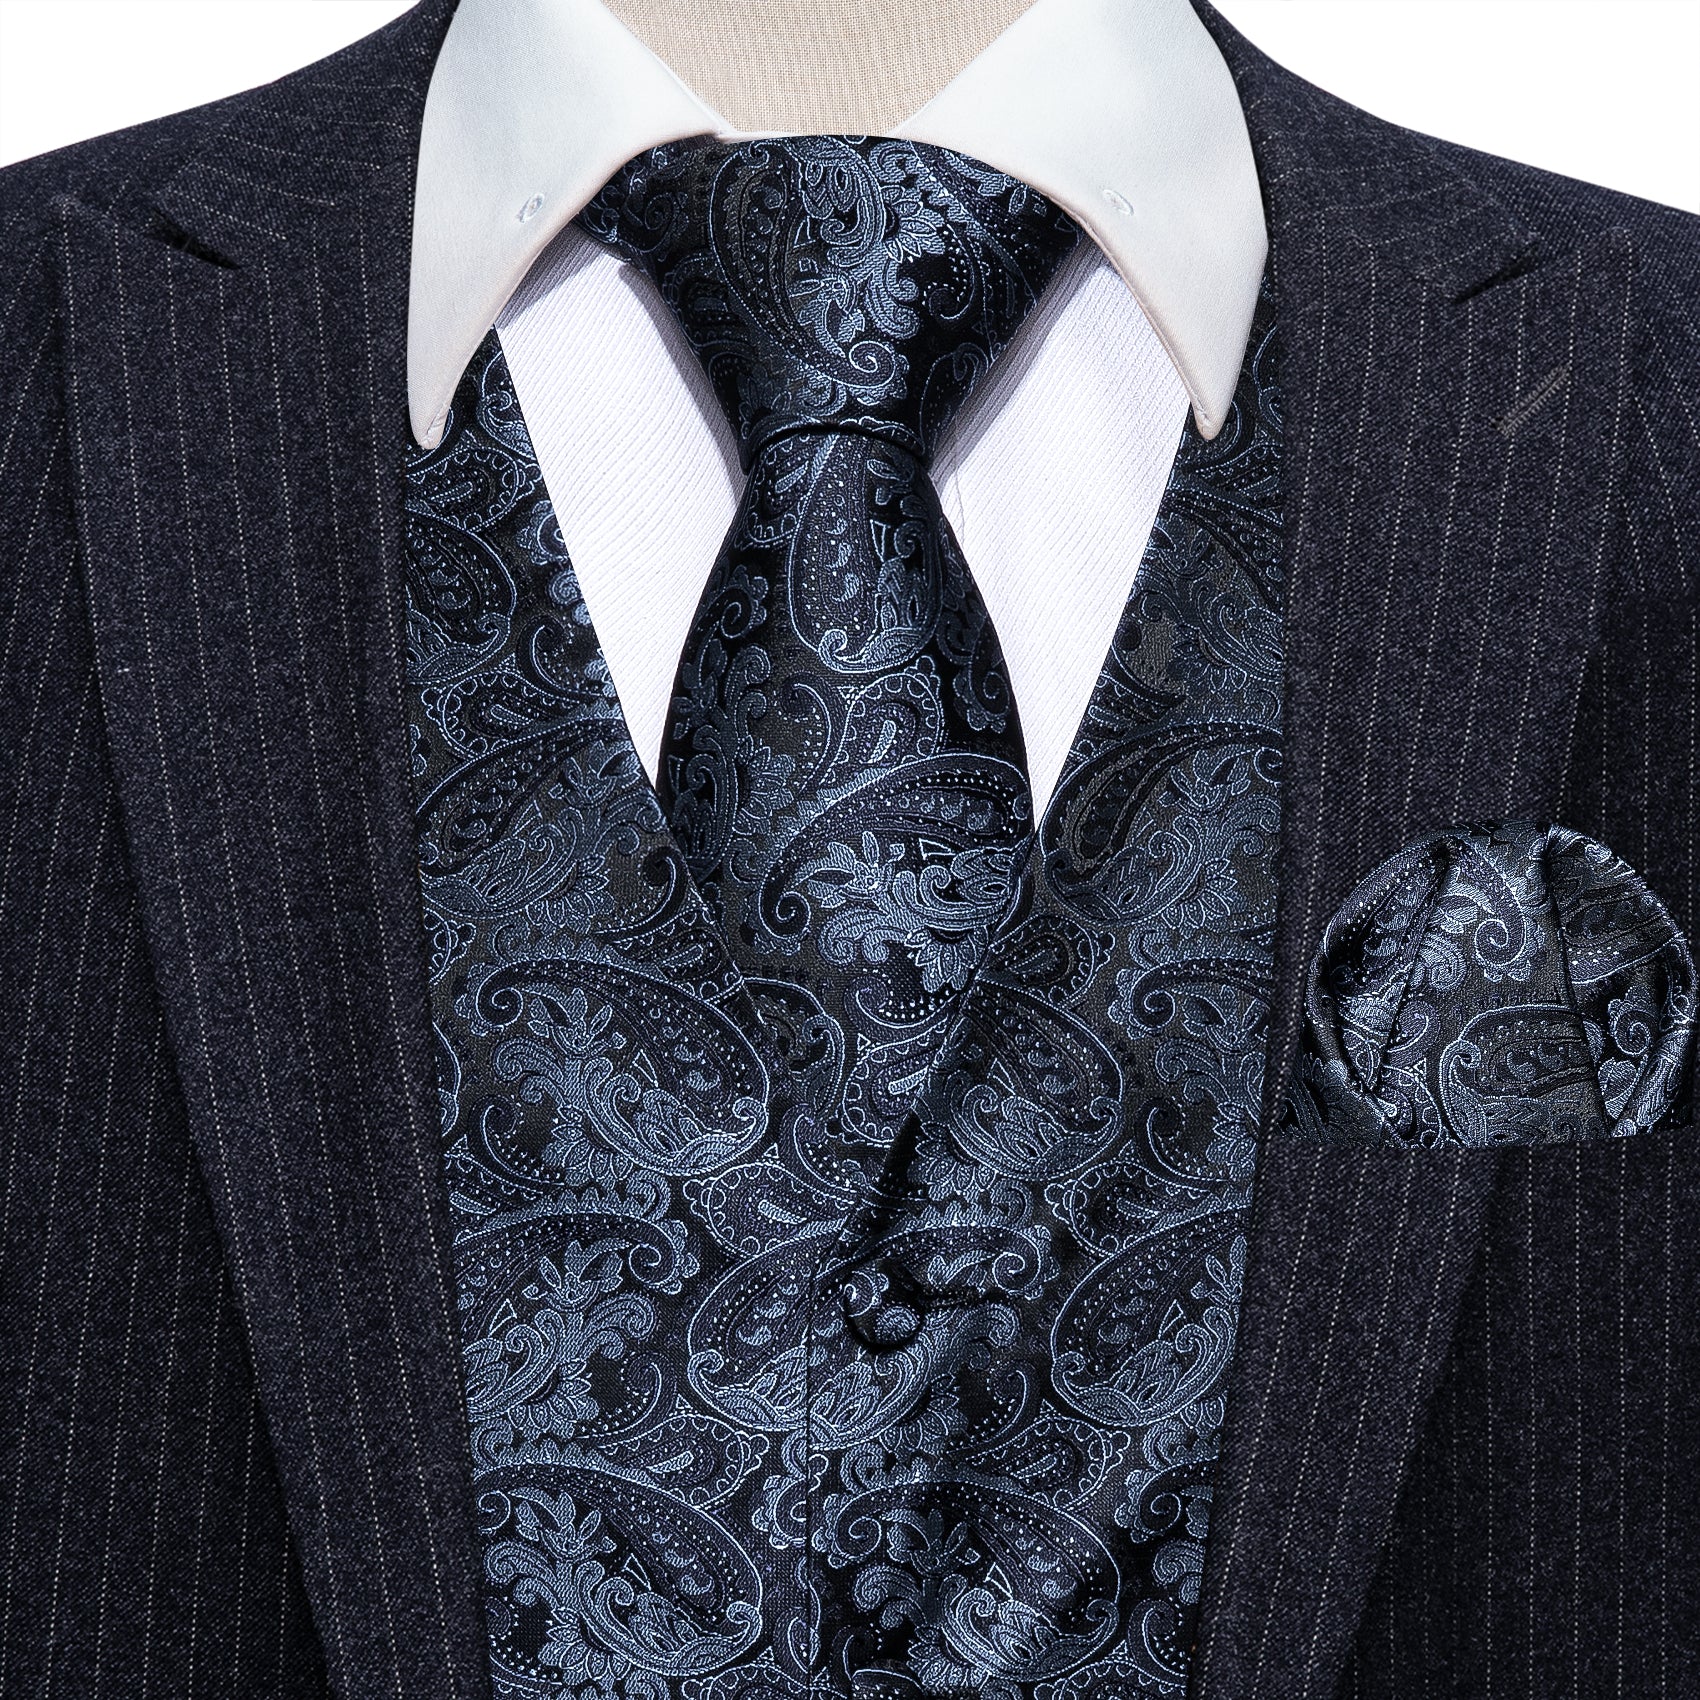 Blue Black Paisley Silk Vest Necktie Pocket square Cufflinks